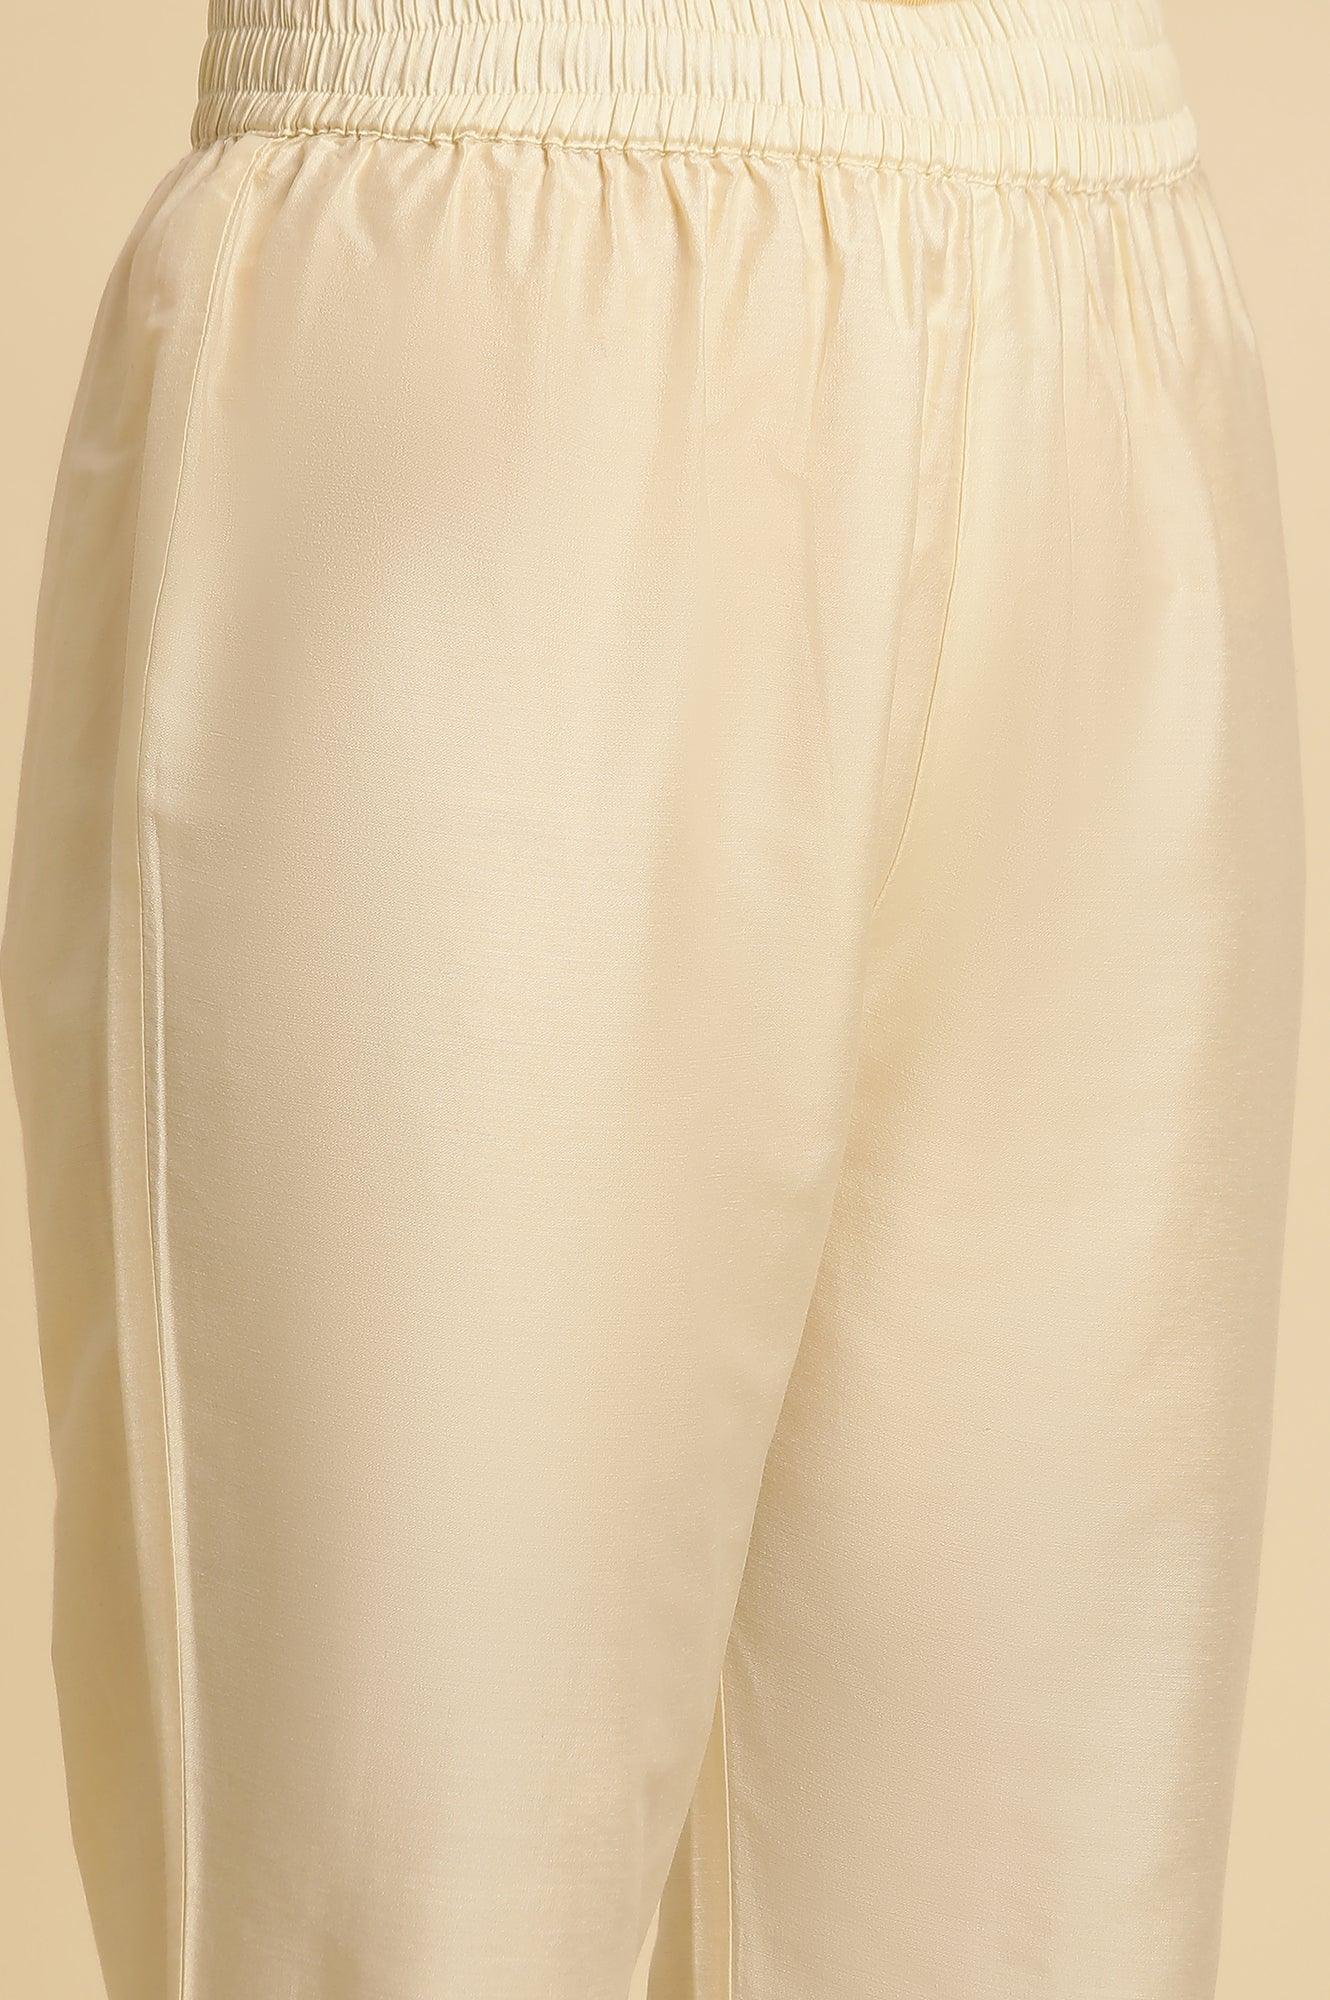 White Sleeveless Printed Flared Kurta, Pants And Dupatta Set - wforwoman